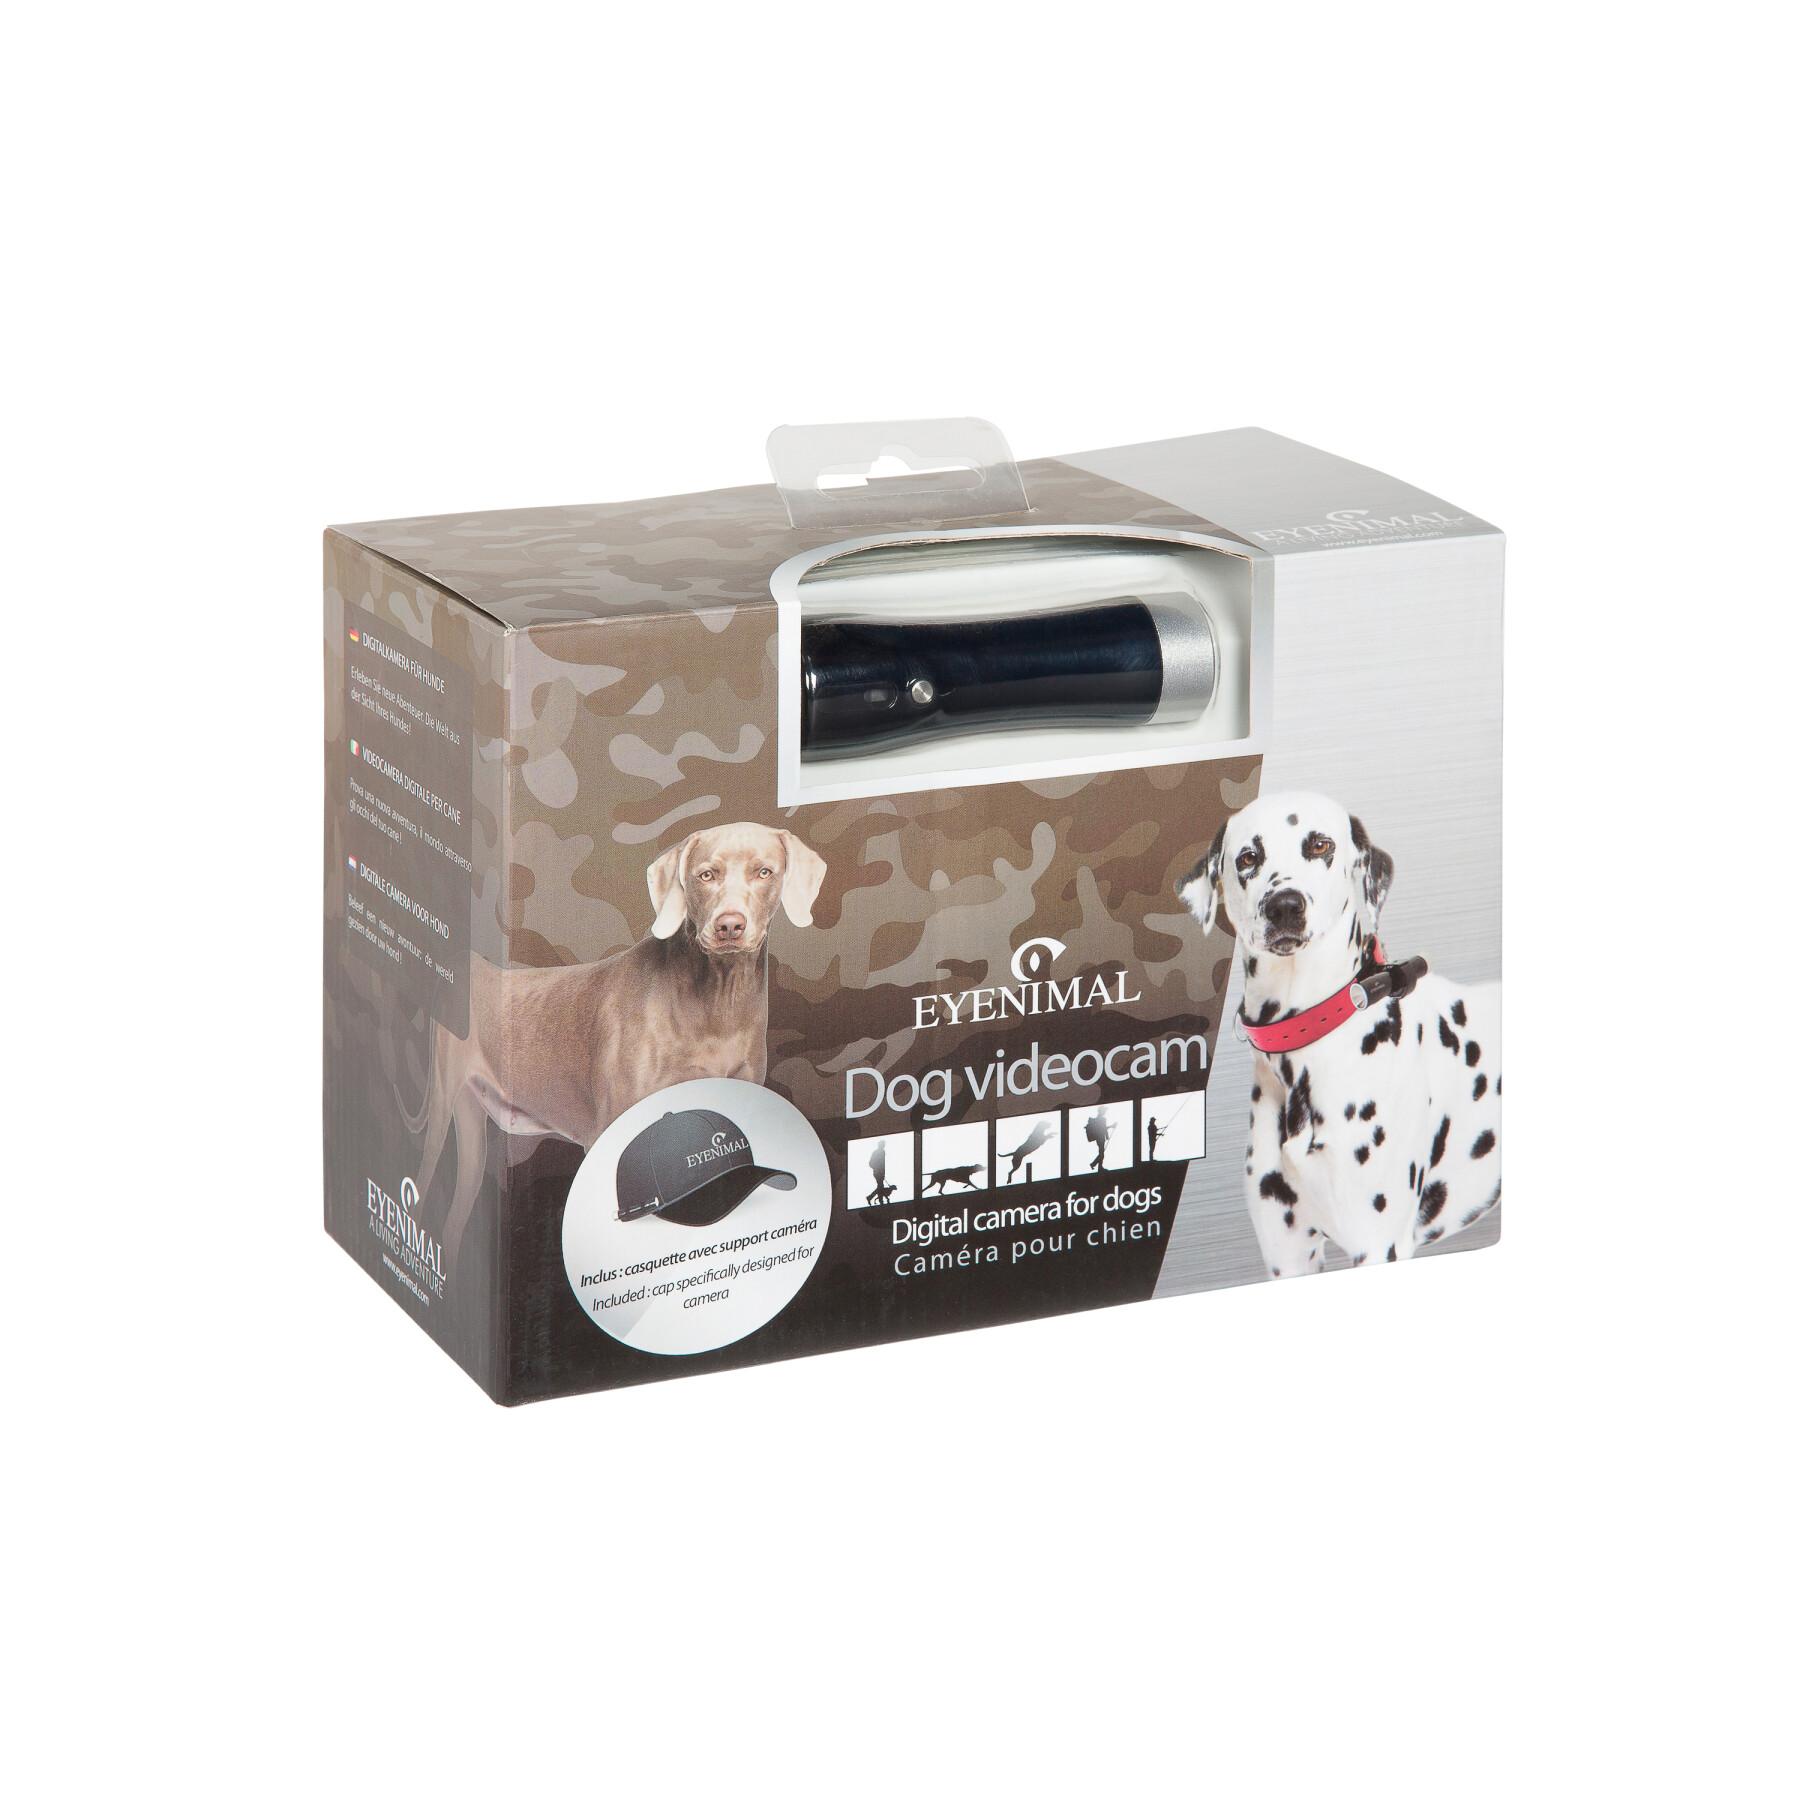 Telecamera per cani Eyenimal Dog Videocam